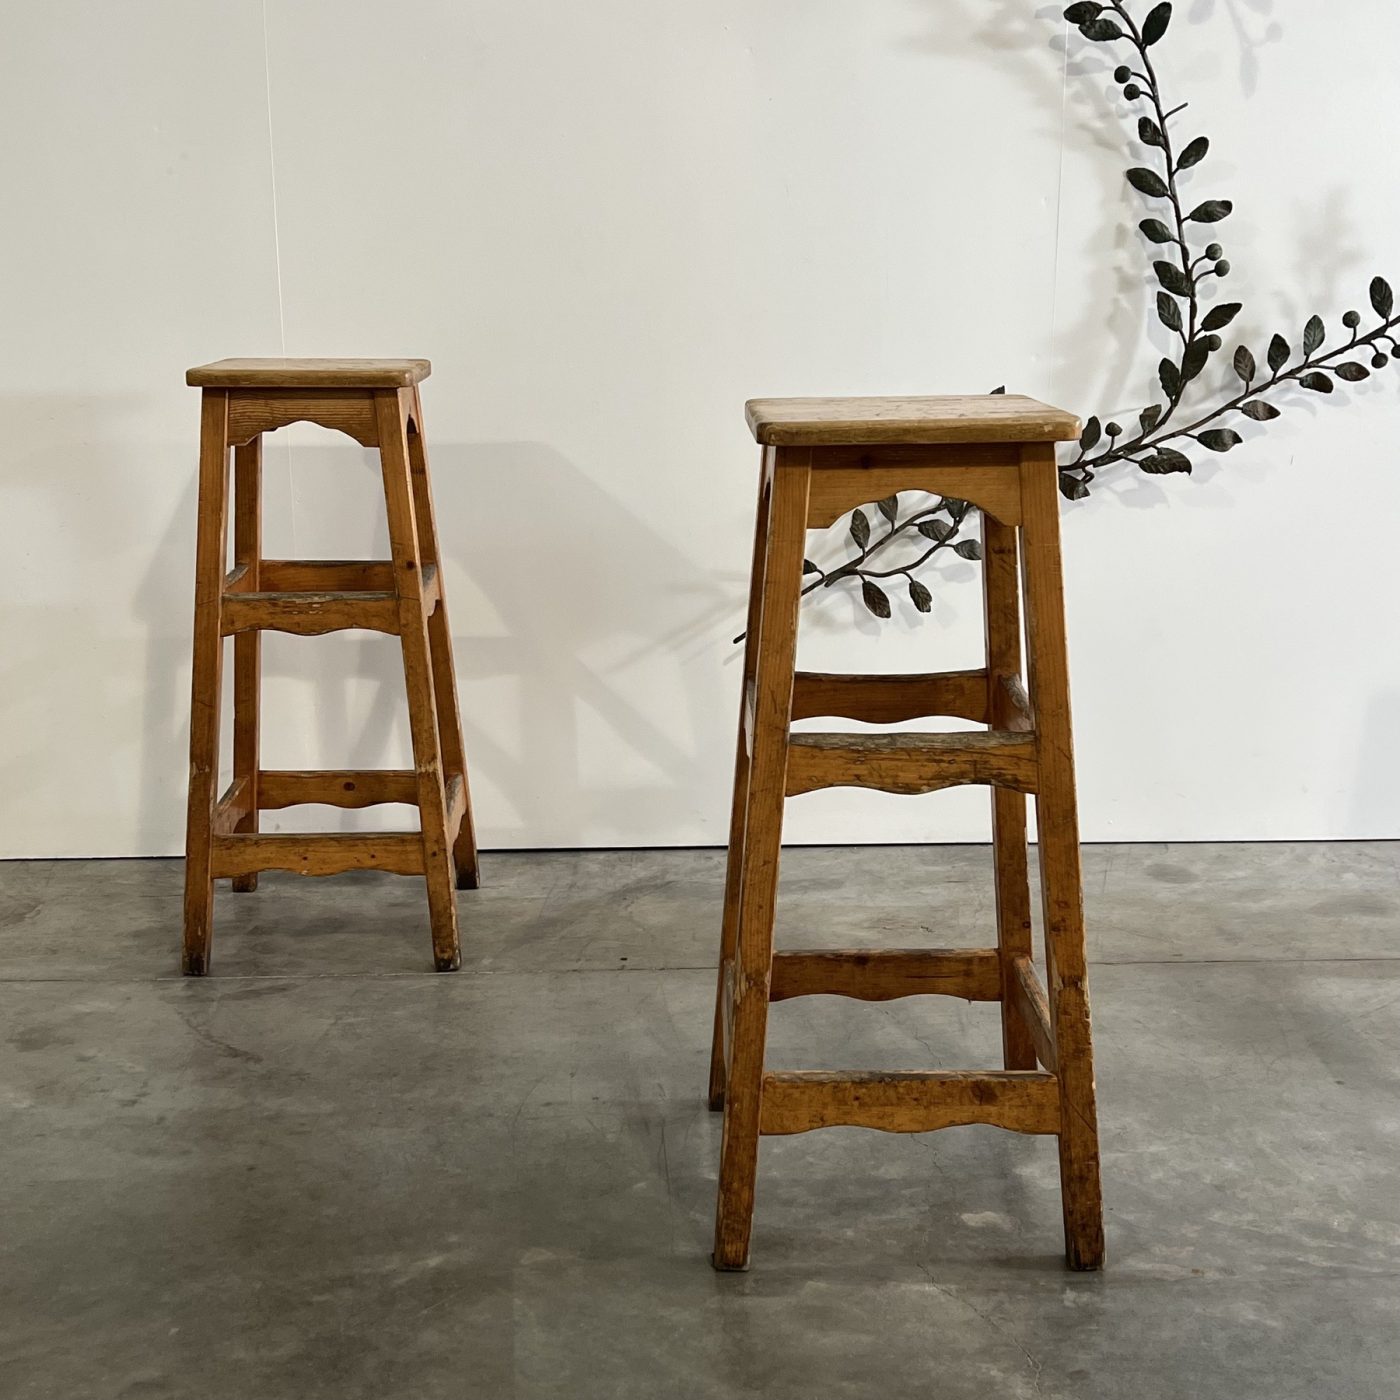 objet-vagabond-artist-stools0003